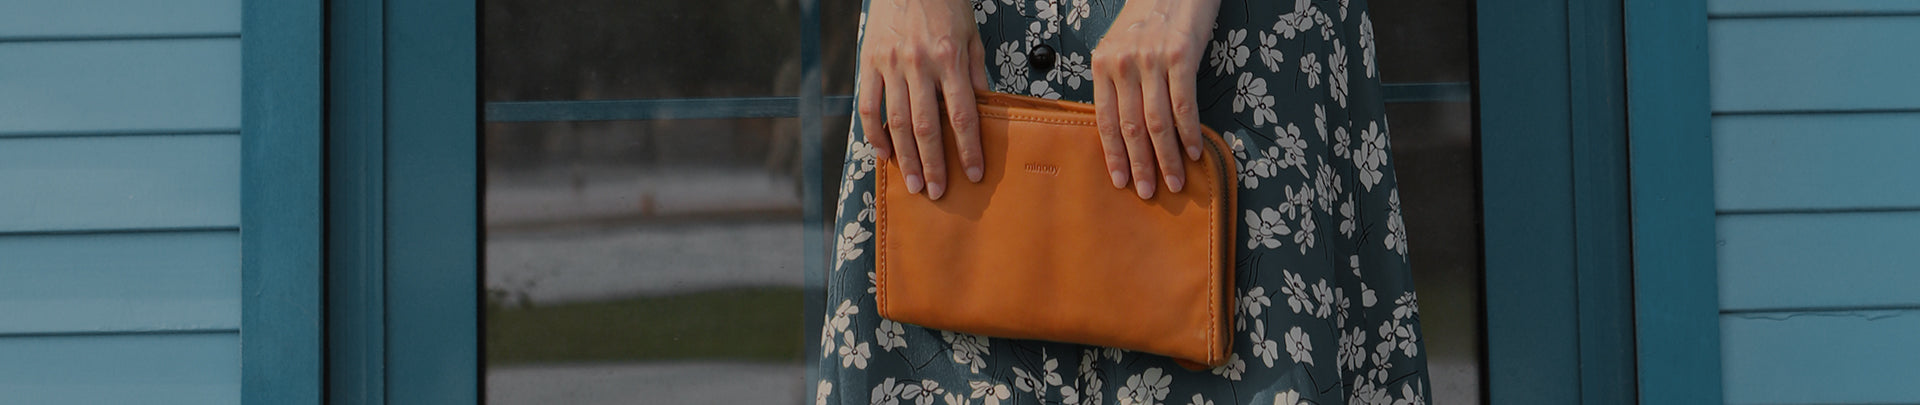 Leather Clutch & Evening Bags for Women | Designer Clutch Purse